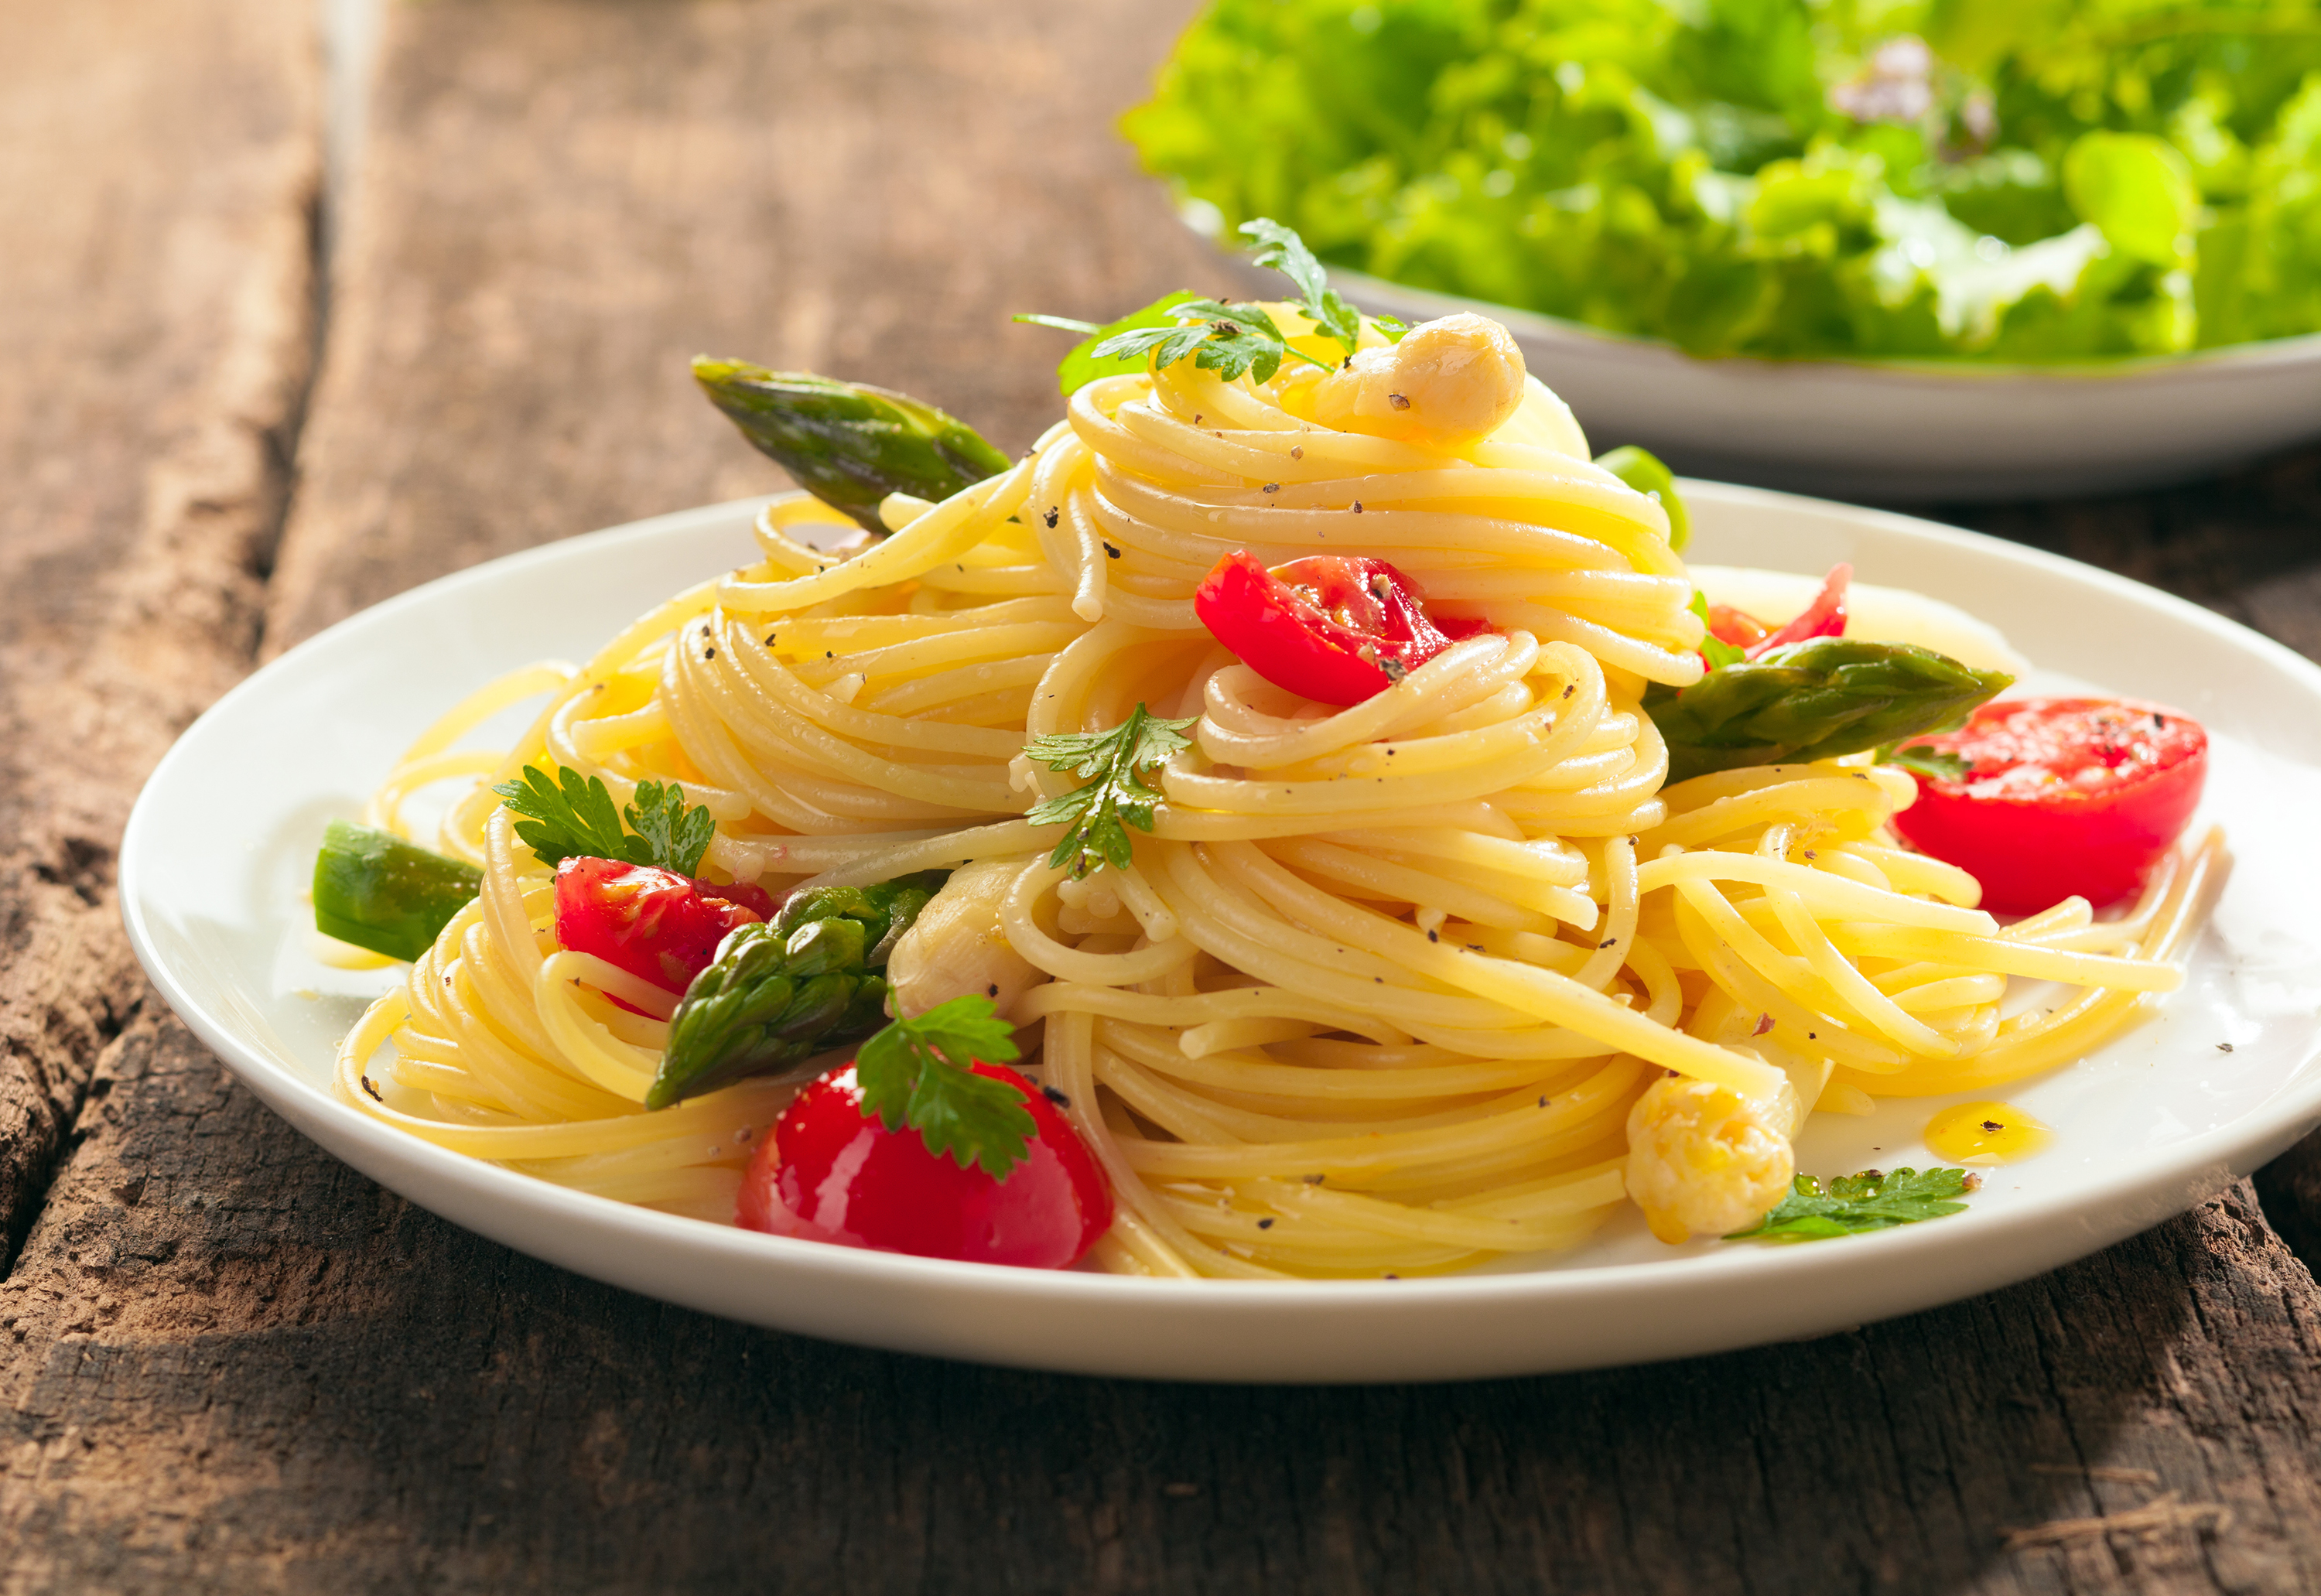 Some spaghetti. Спагетти. Макароны в тарелке. Итальянская паста. Тарелка спагетти.